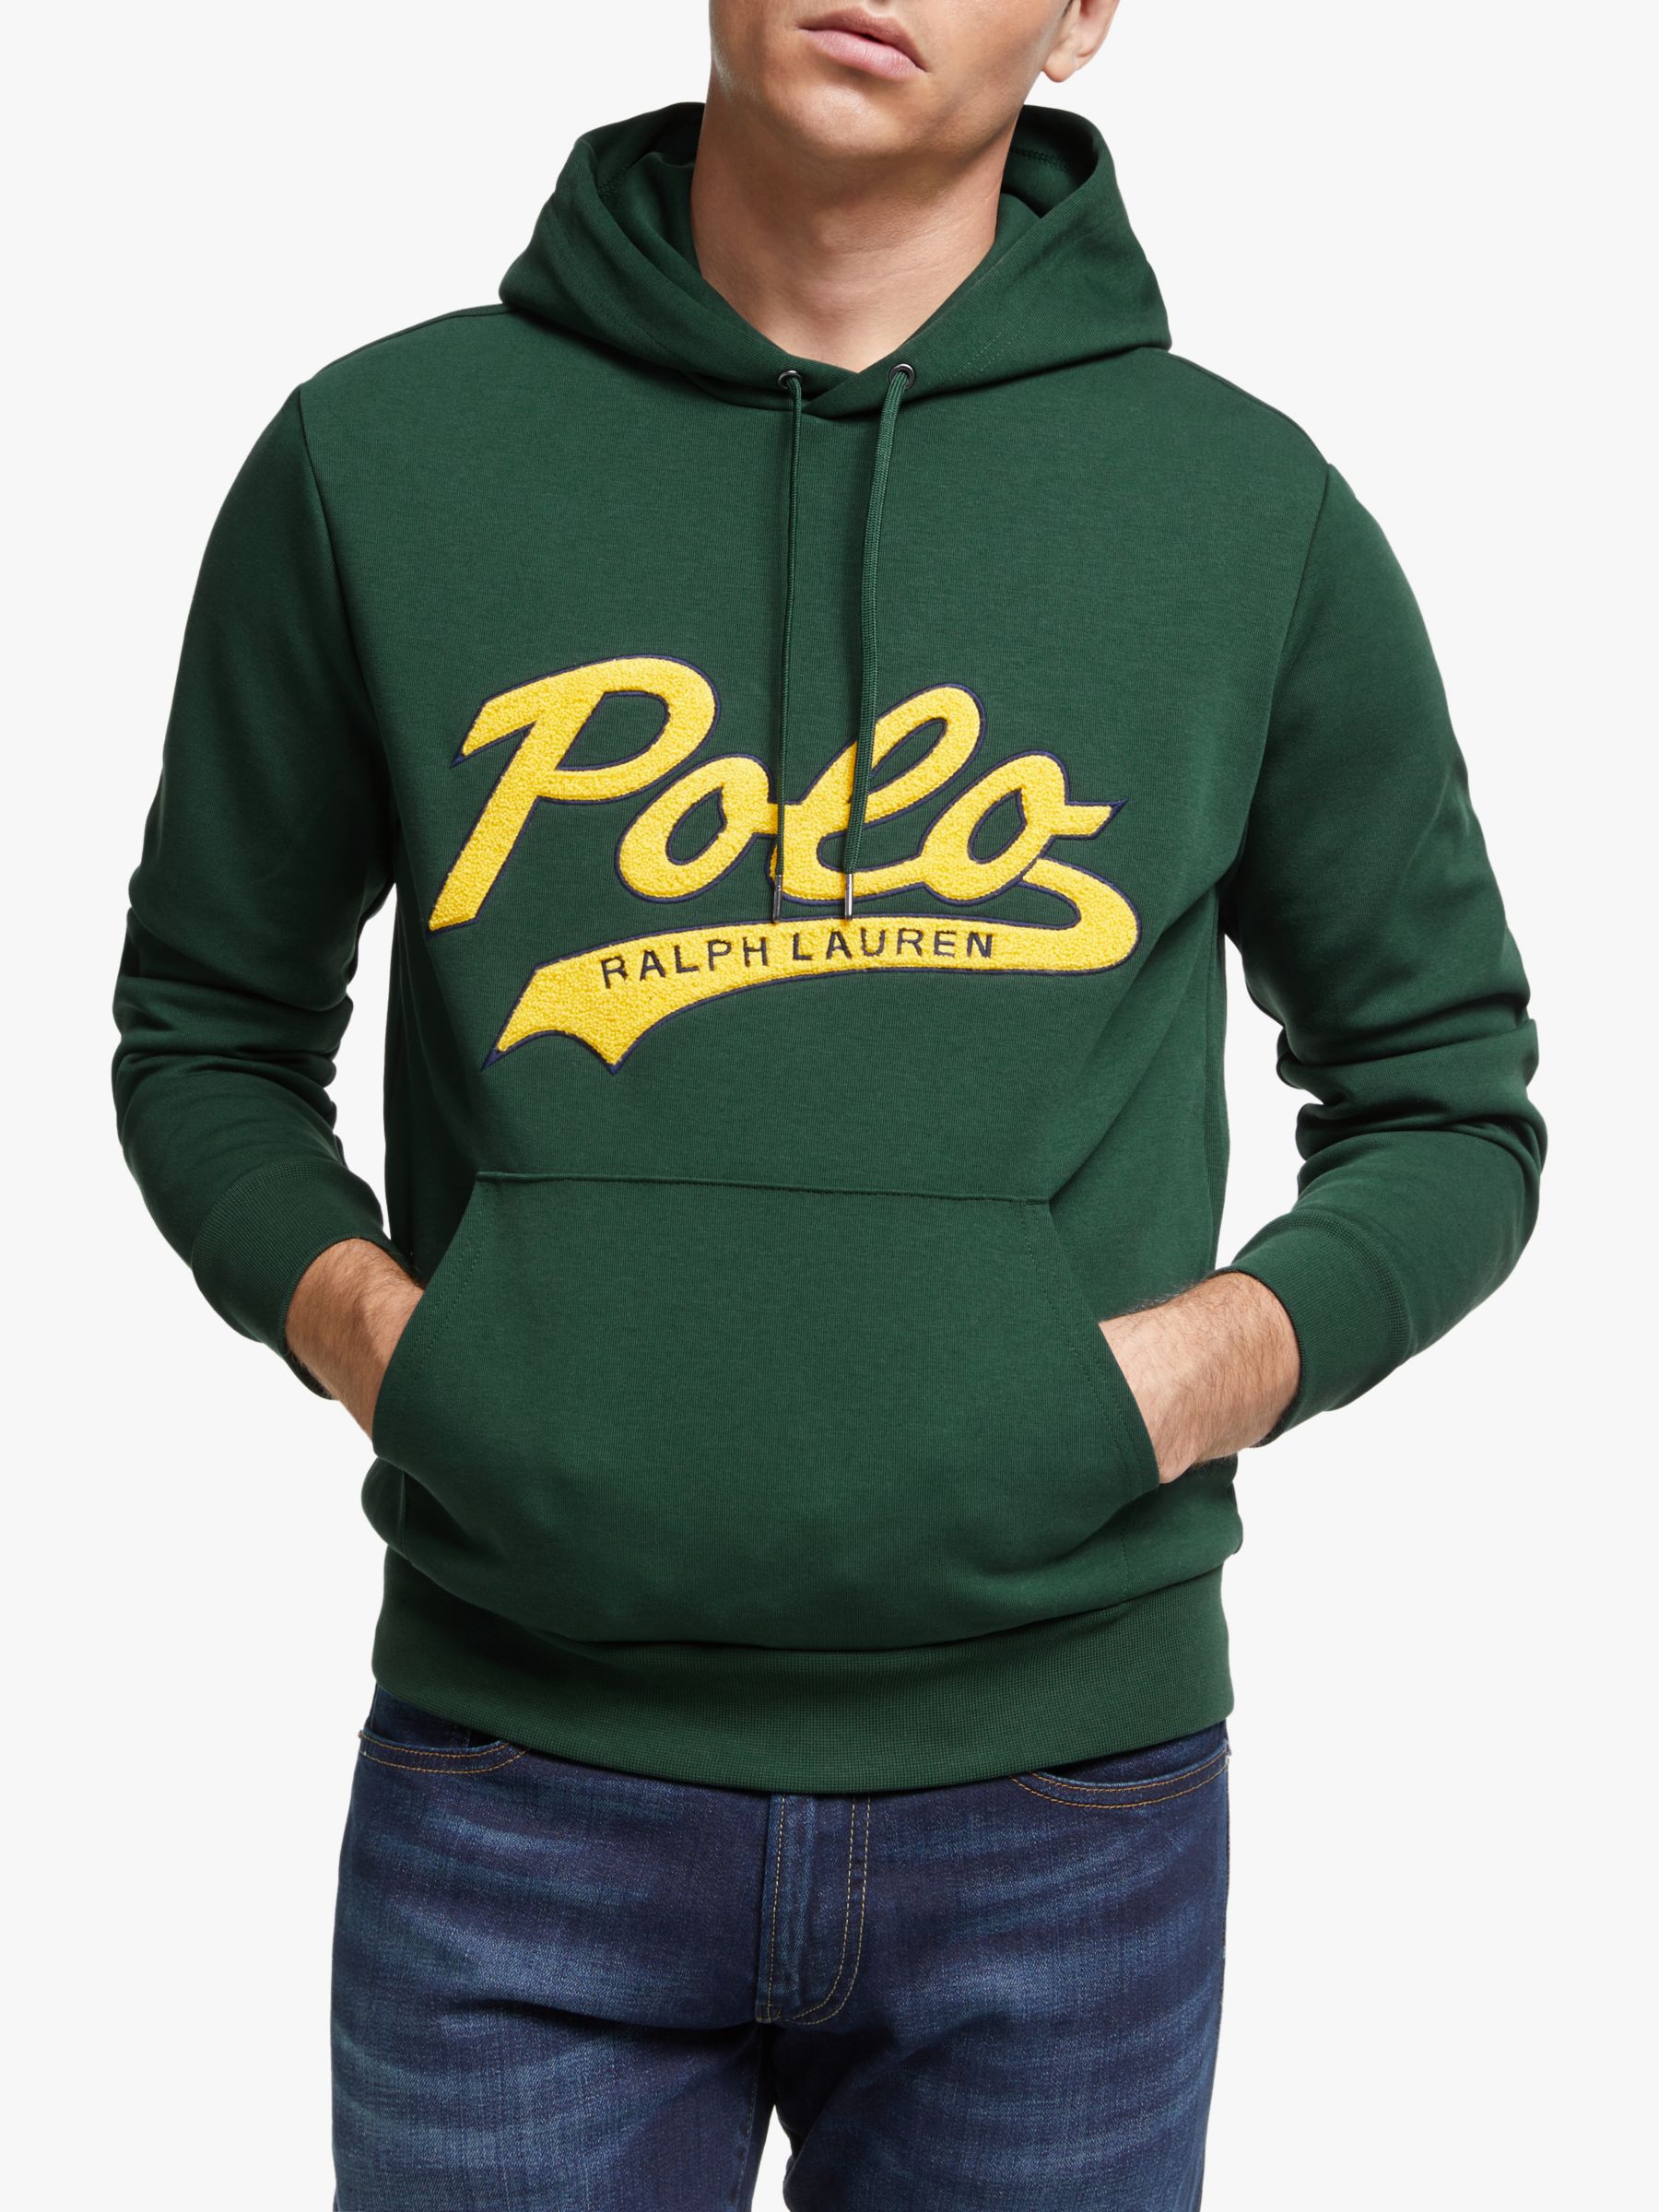 polo ralph lauren logo hoodie